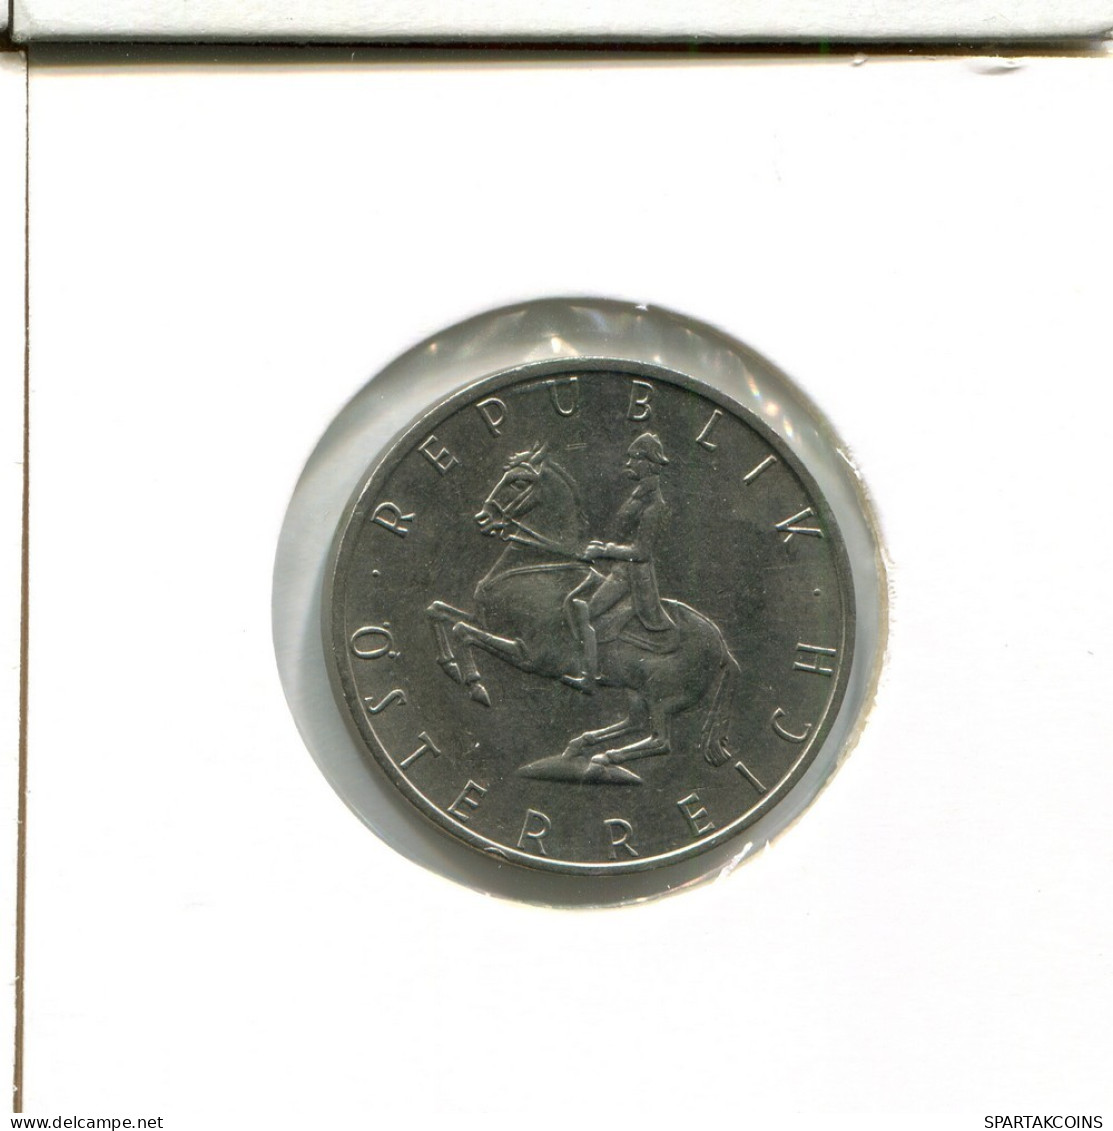 5 SCHILLING 1988 AUSTRIA Coin #AT674.U.A - Autriche